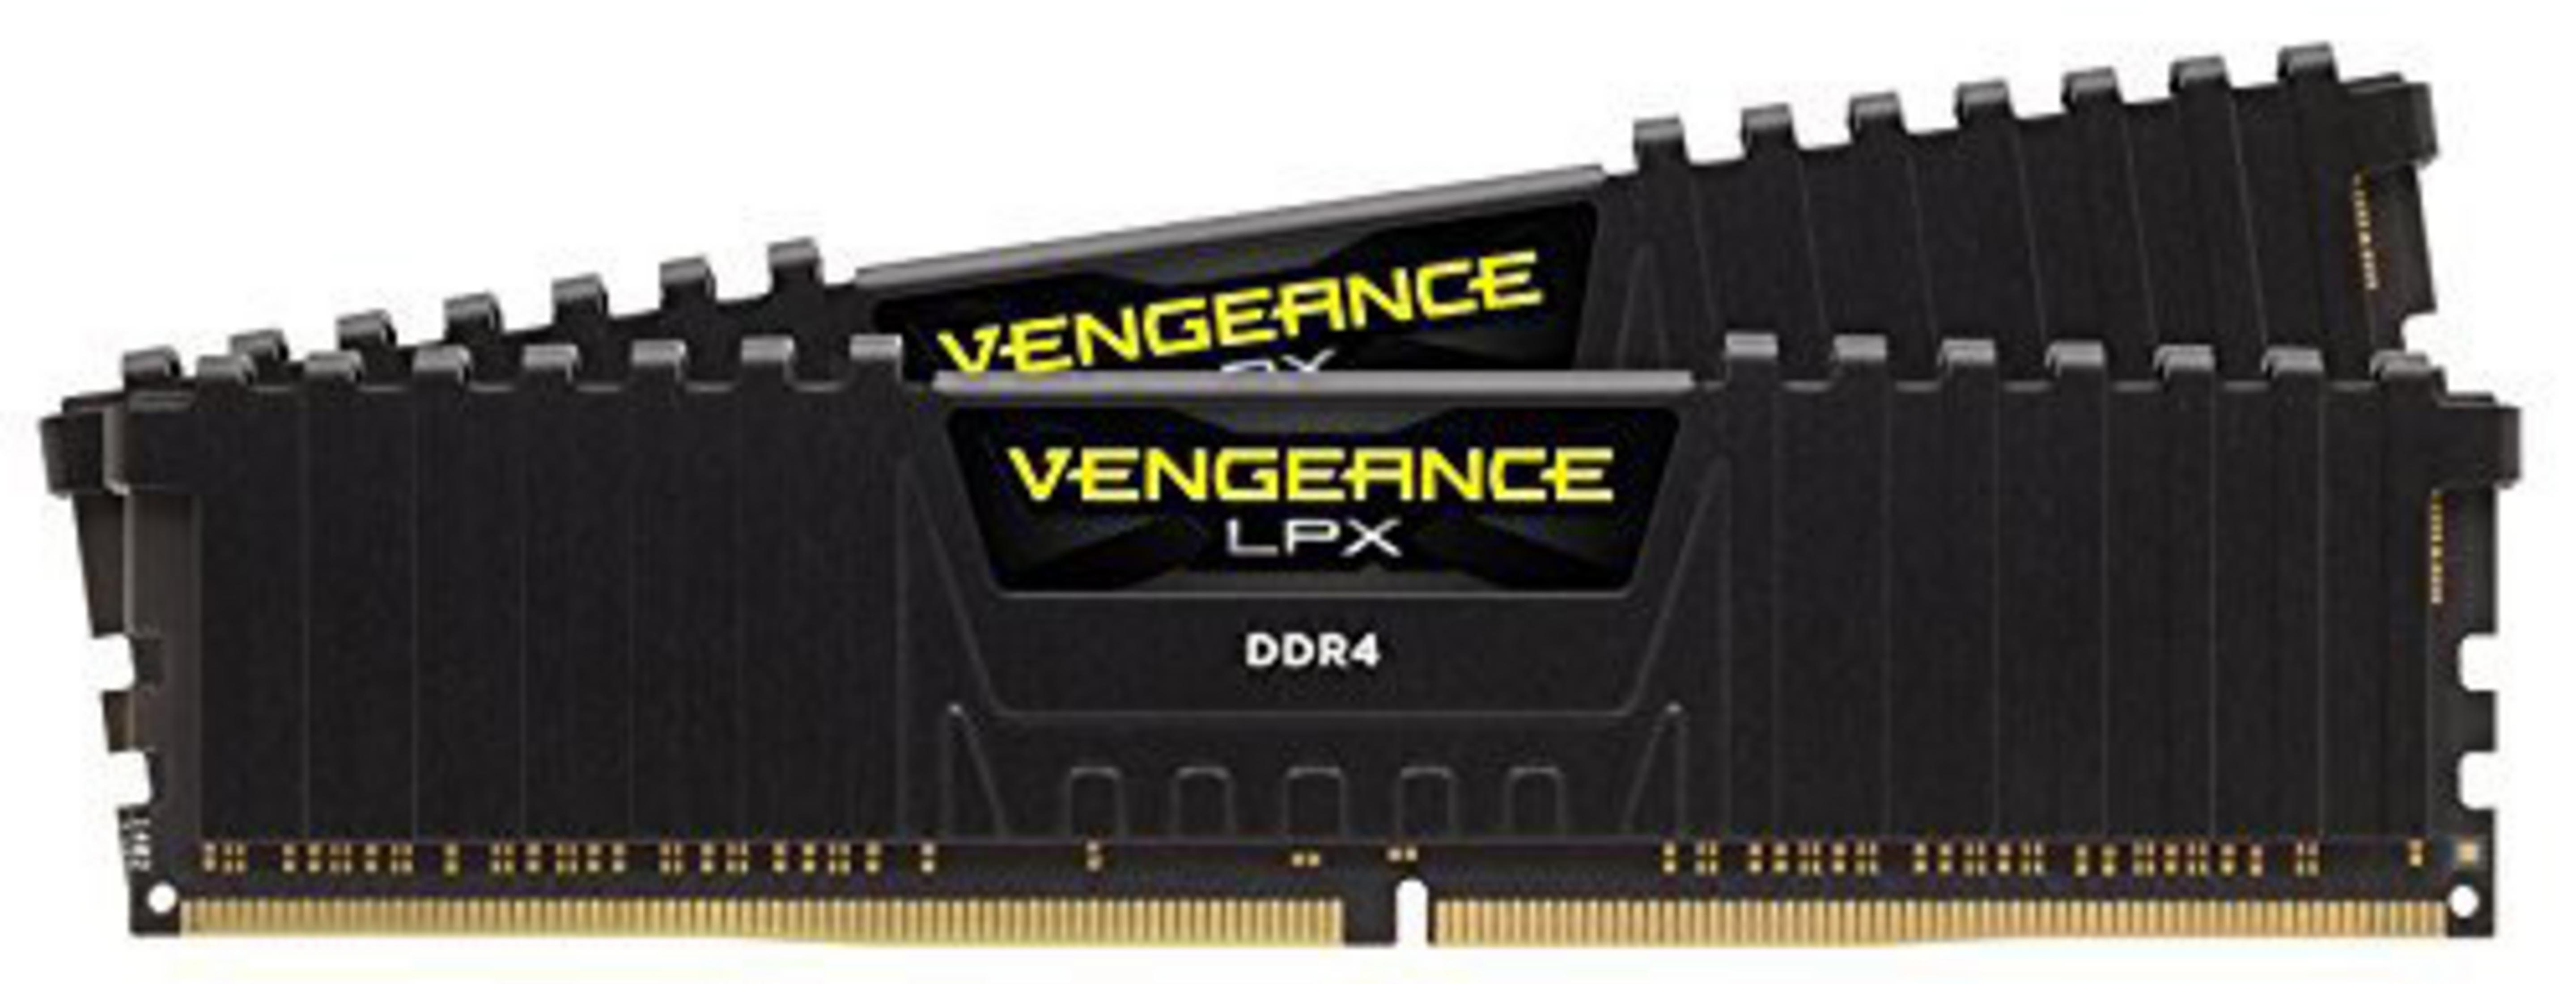 GB CORSAIR DDR4 CMK16GX4M2A2400C14 VENGEANCE 16 DDR4 Arbeitsspeicher 16GB 2400MHZ LPX